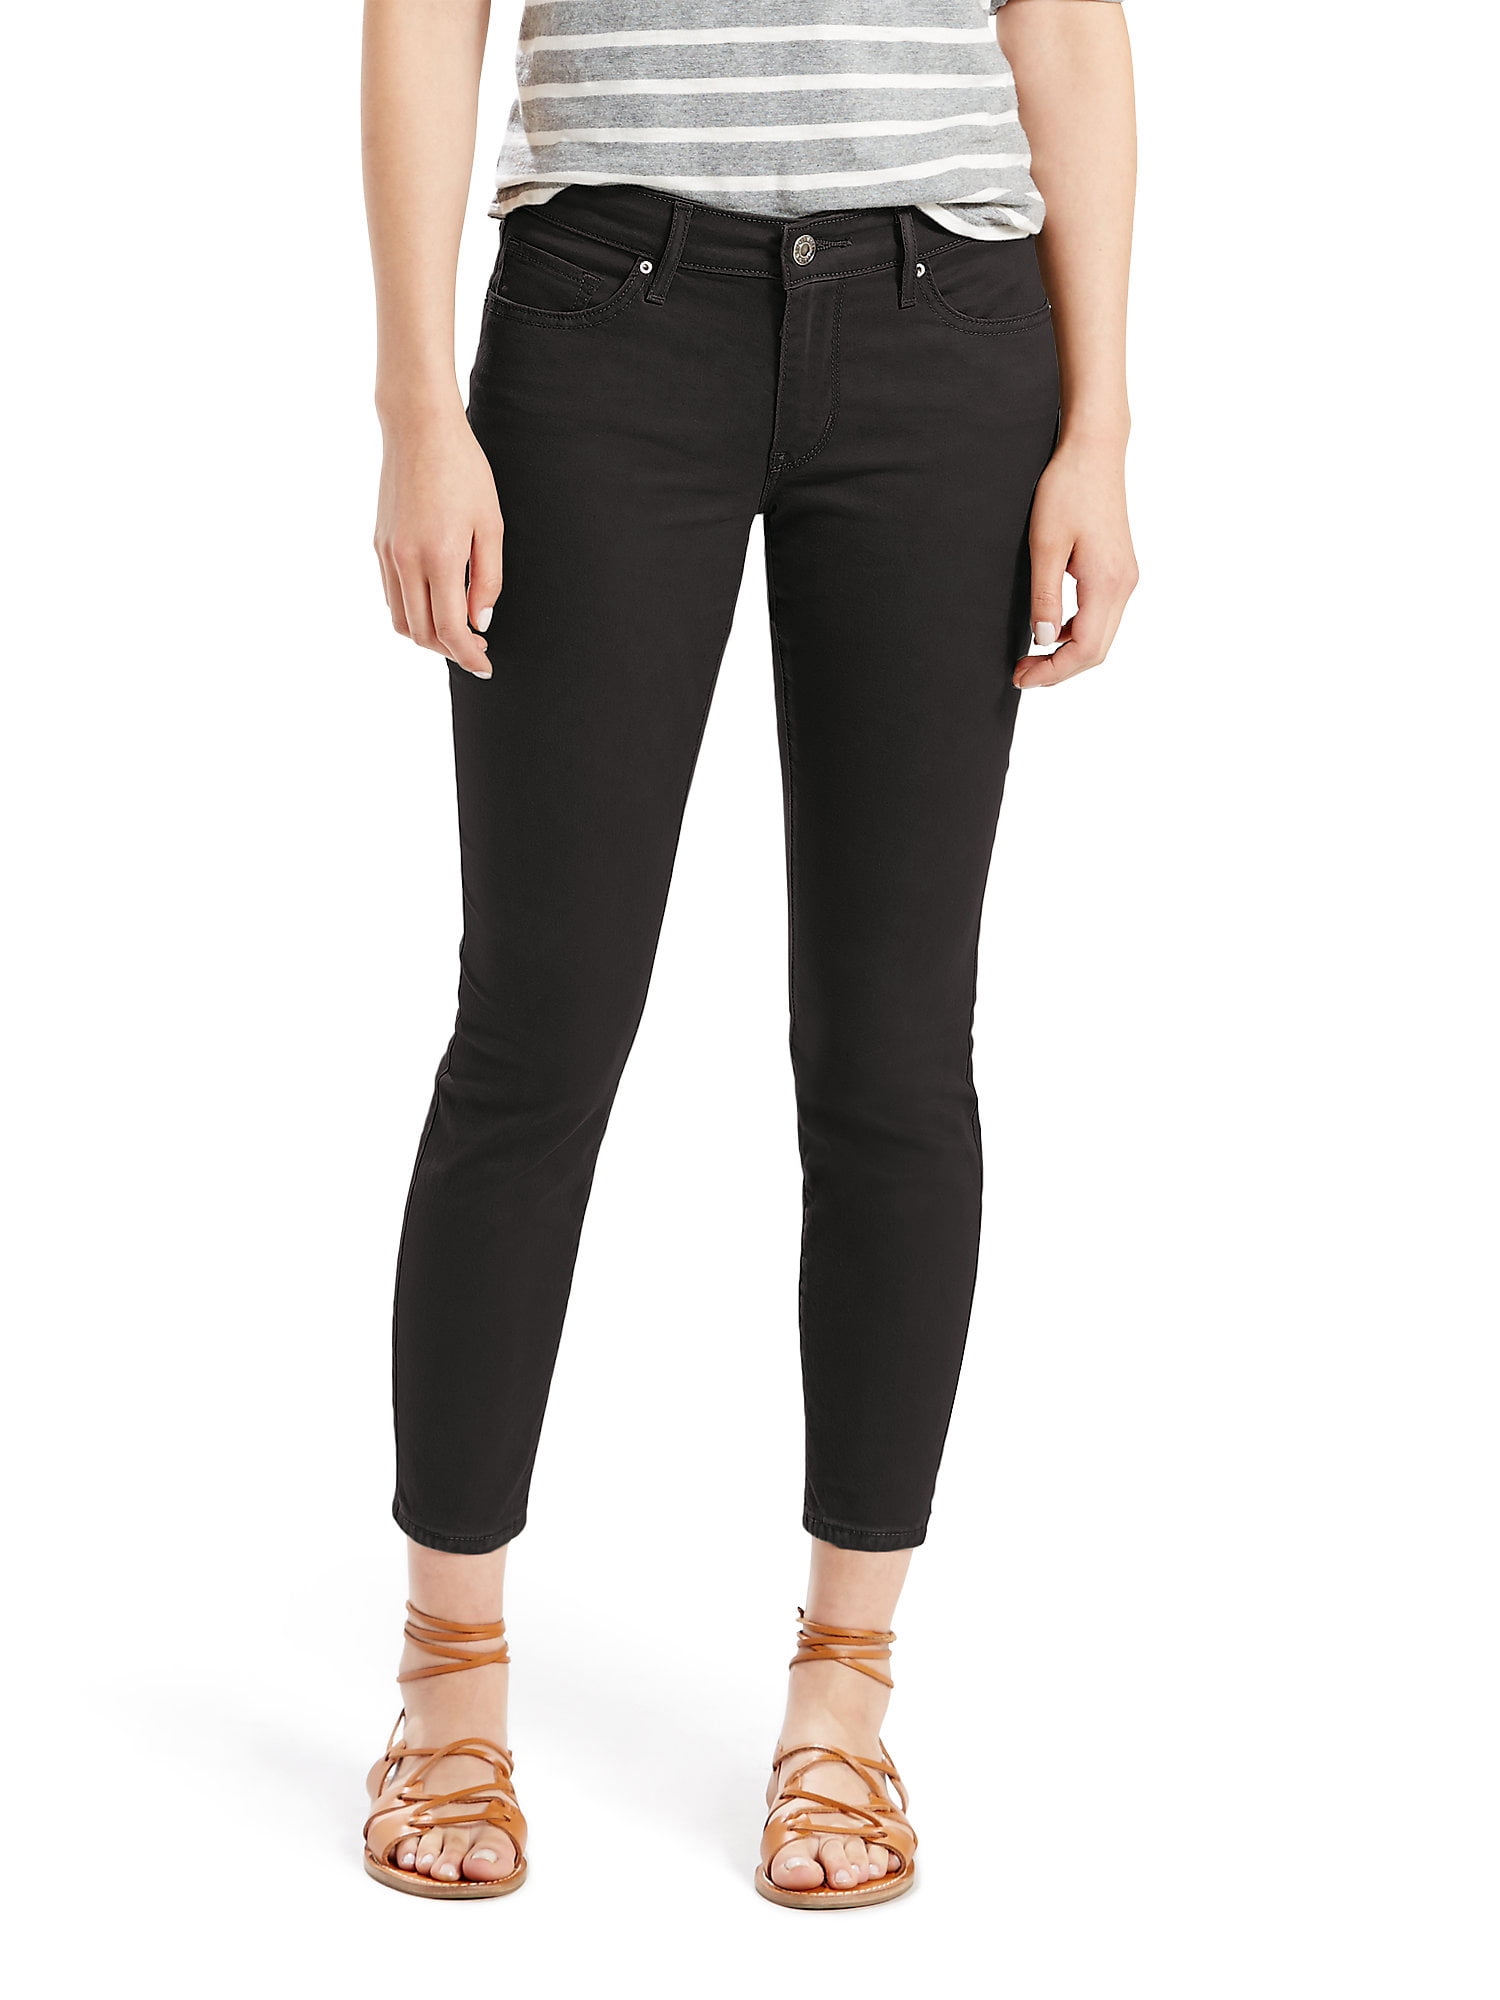 Leviâ€™s Women's 711 Skinny Ankle Jeans - Walmart.com